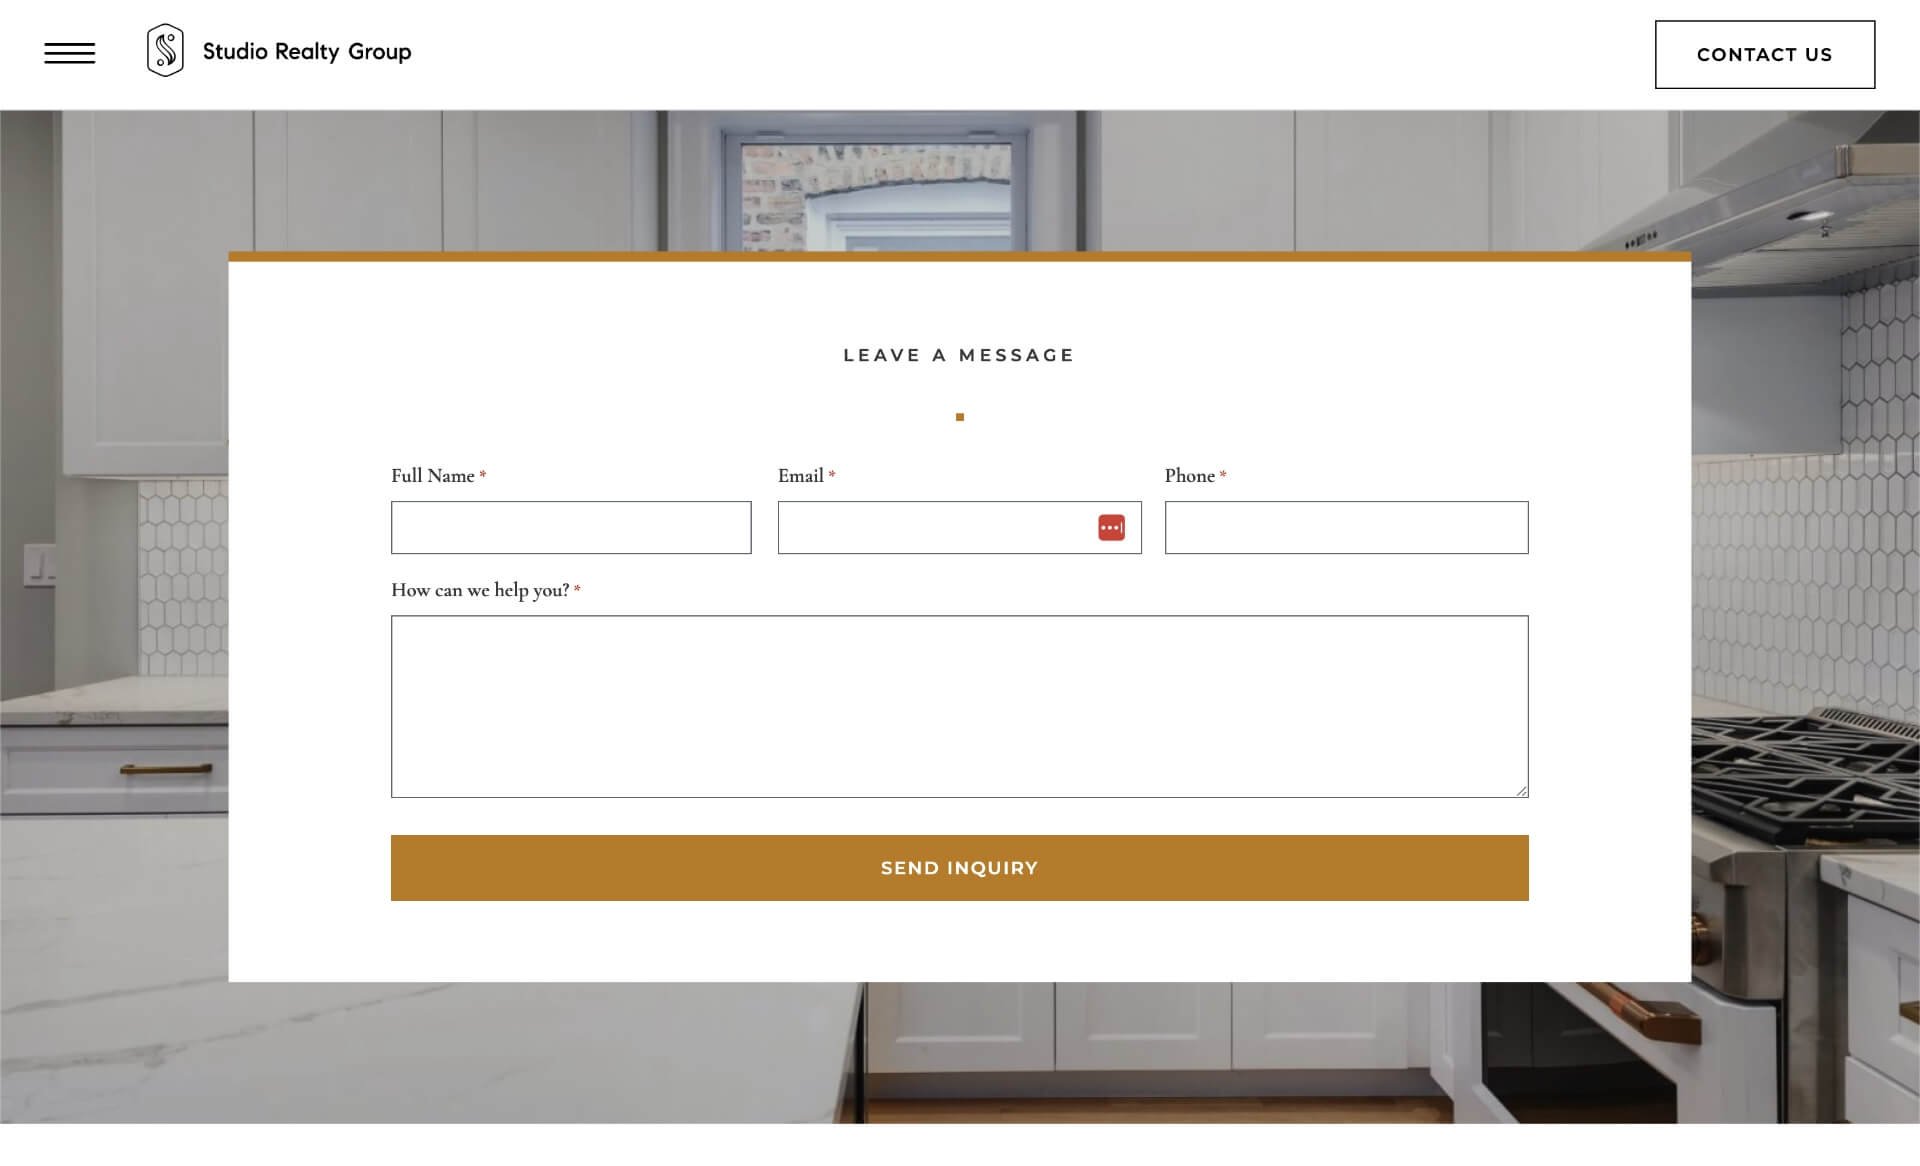 Studio Realty Group Website Design Contact form